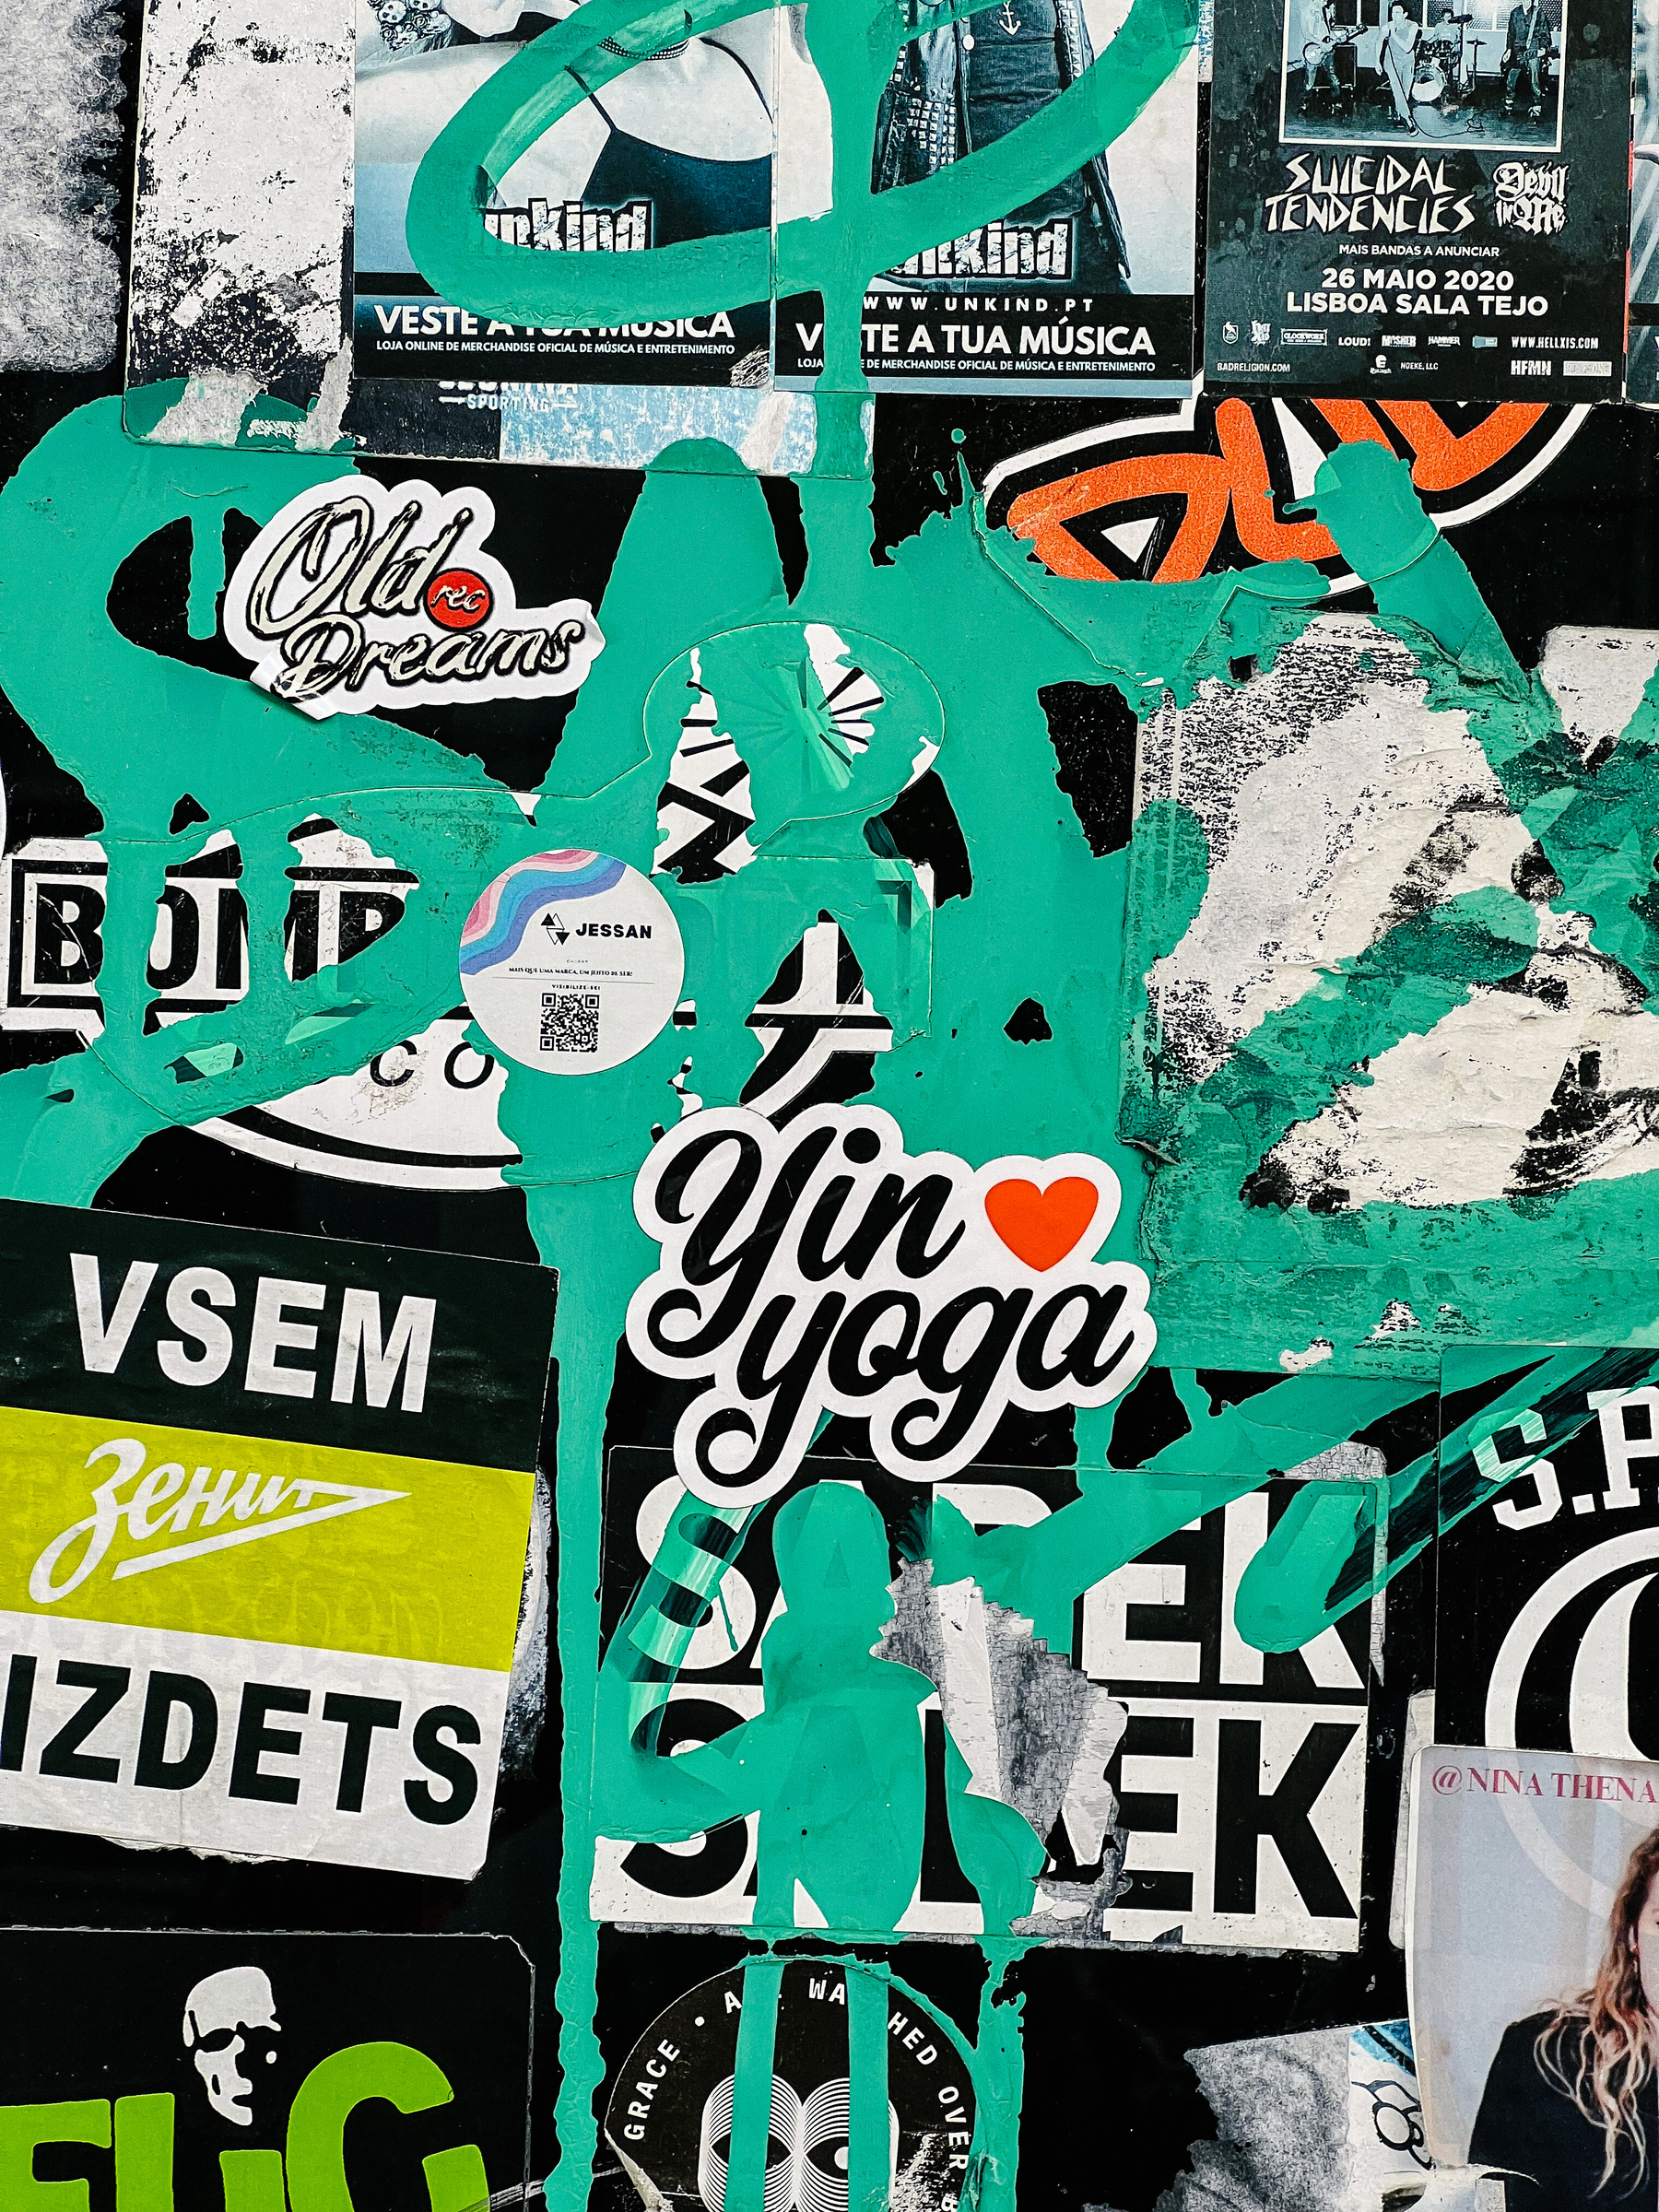 A sticker stands out: “Yin heart emoji Yoga”.